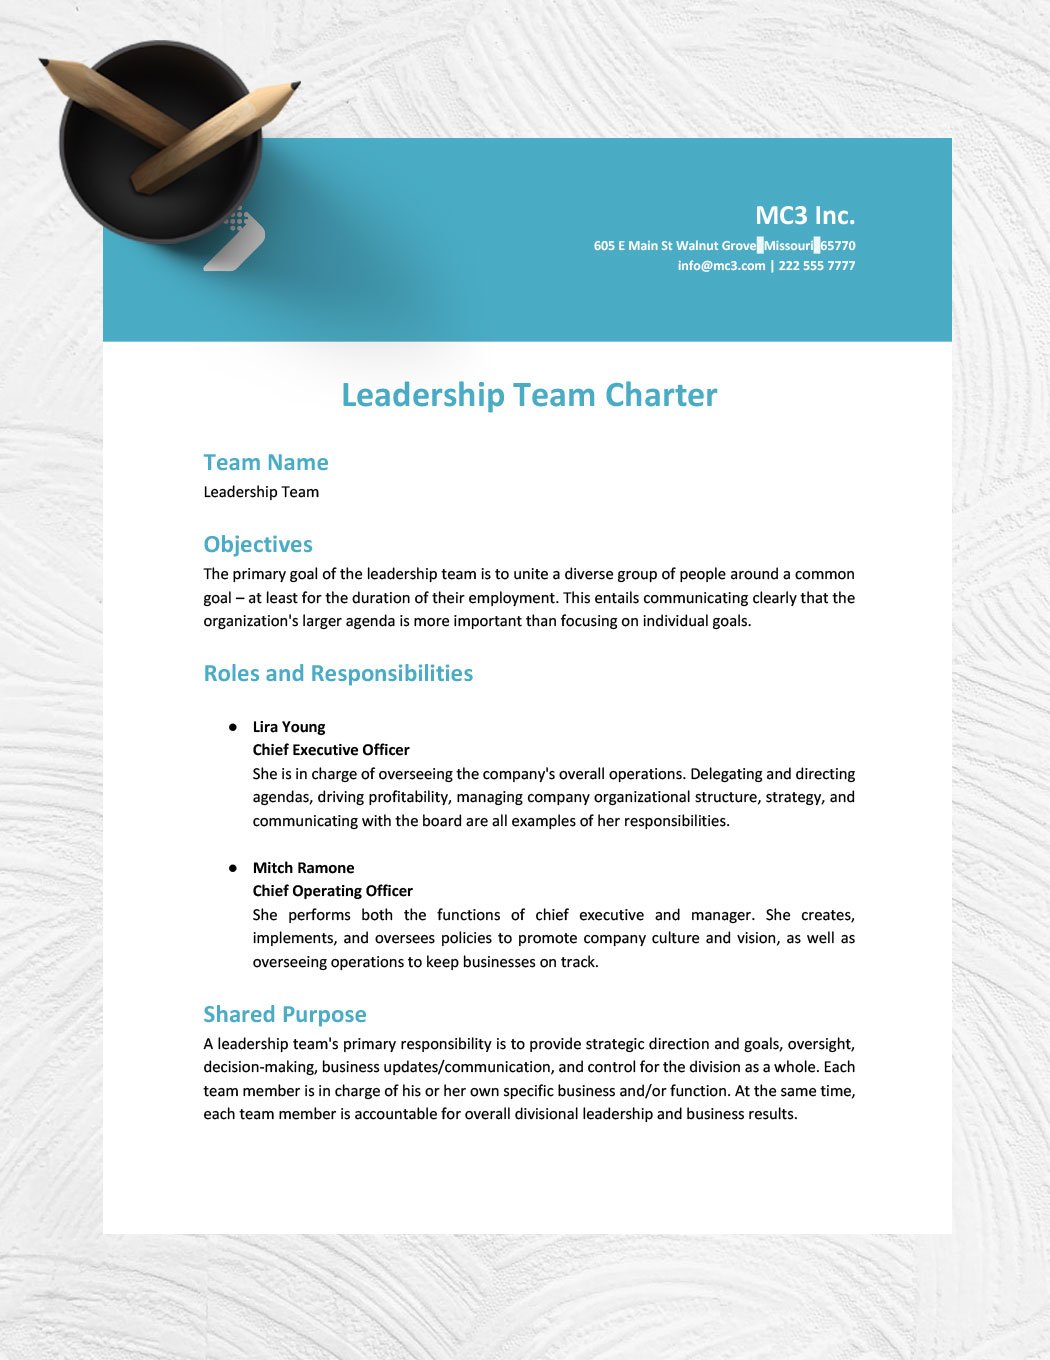 Leadership Team Charter Template